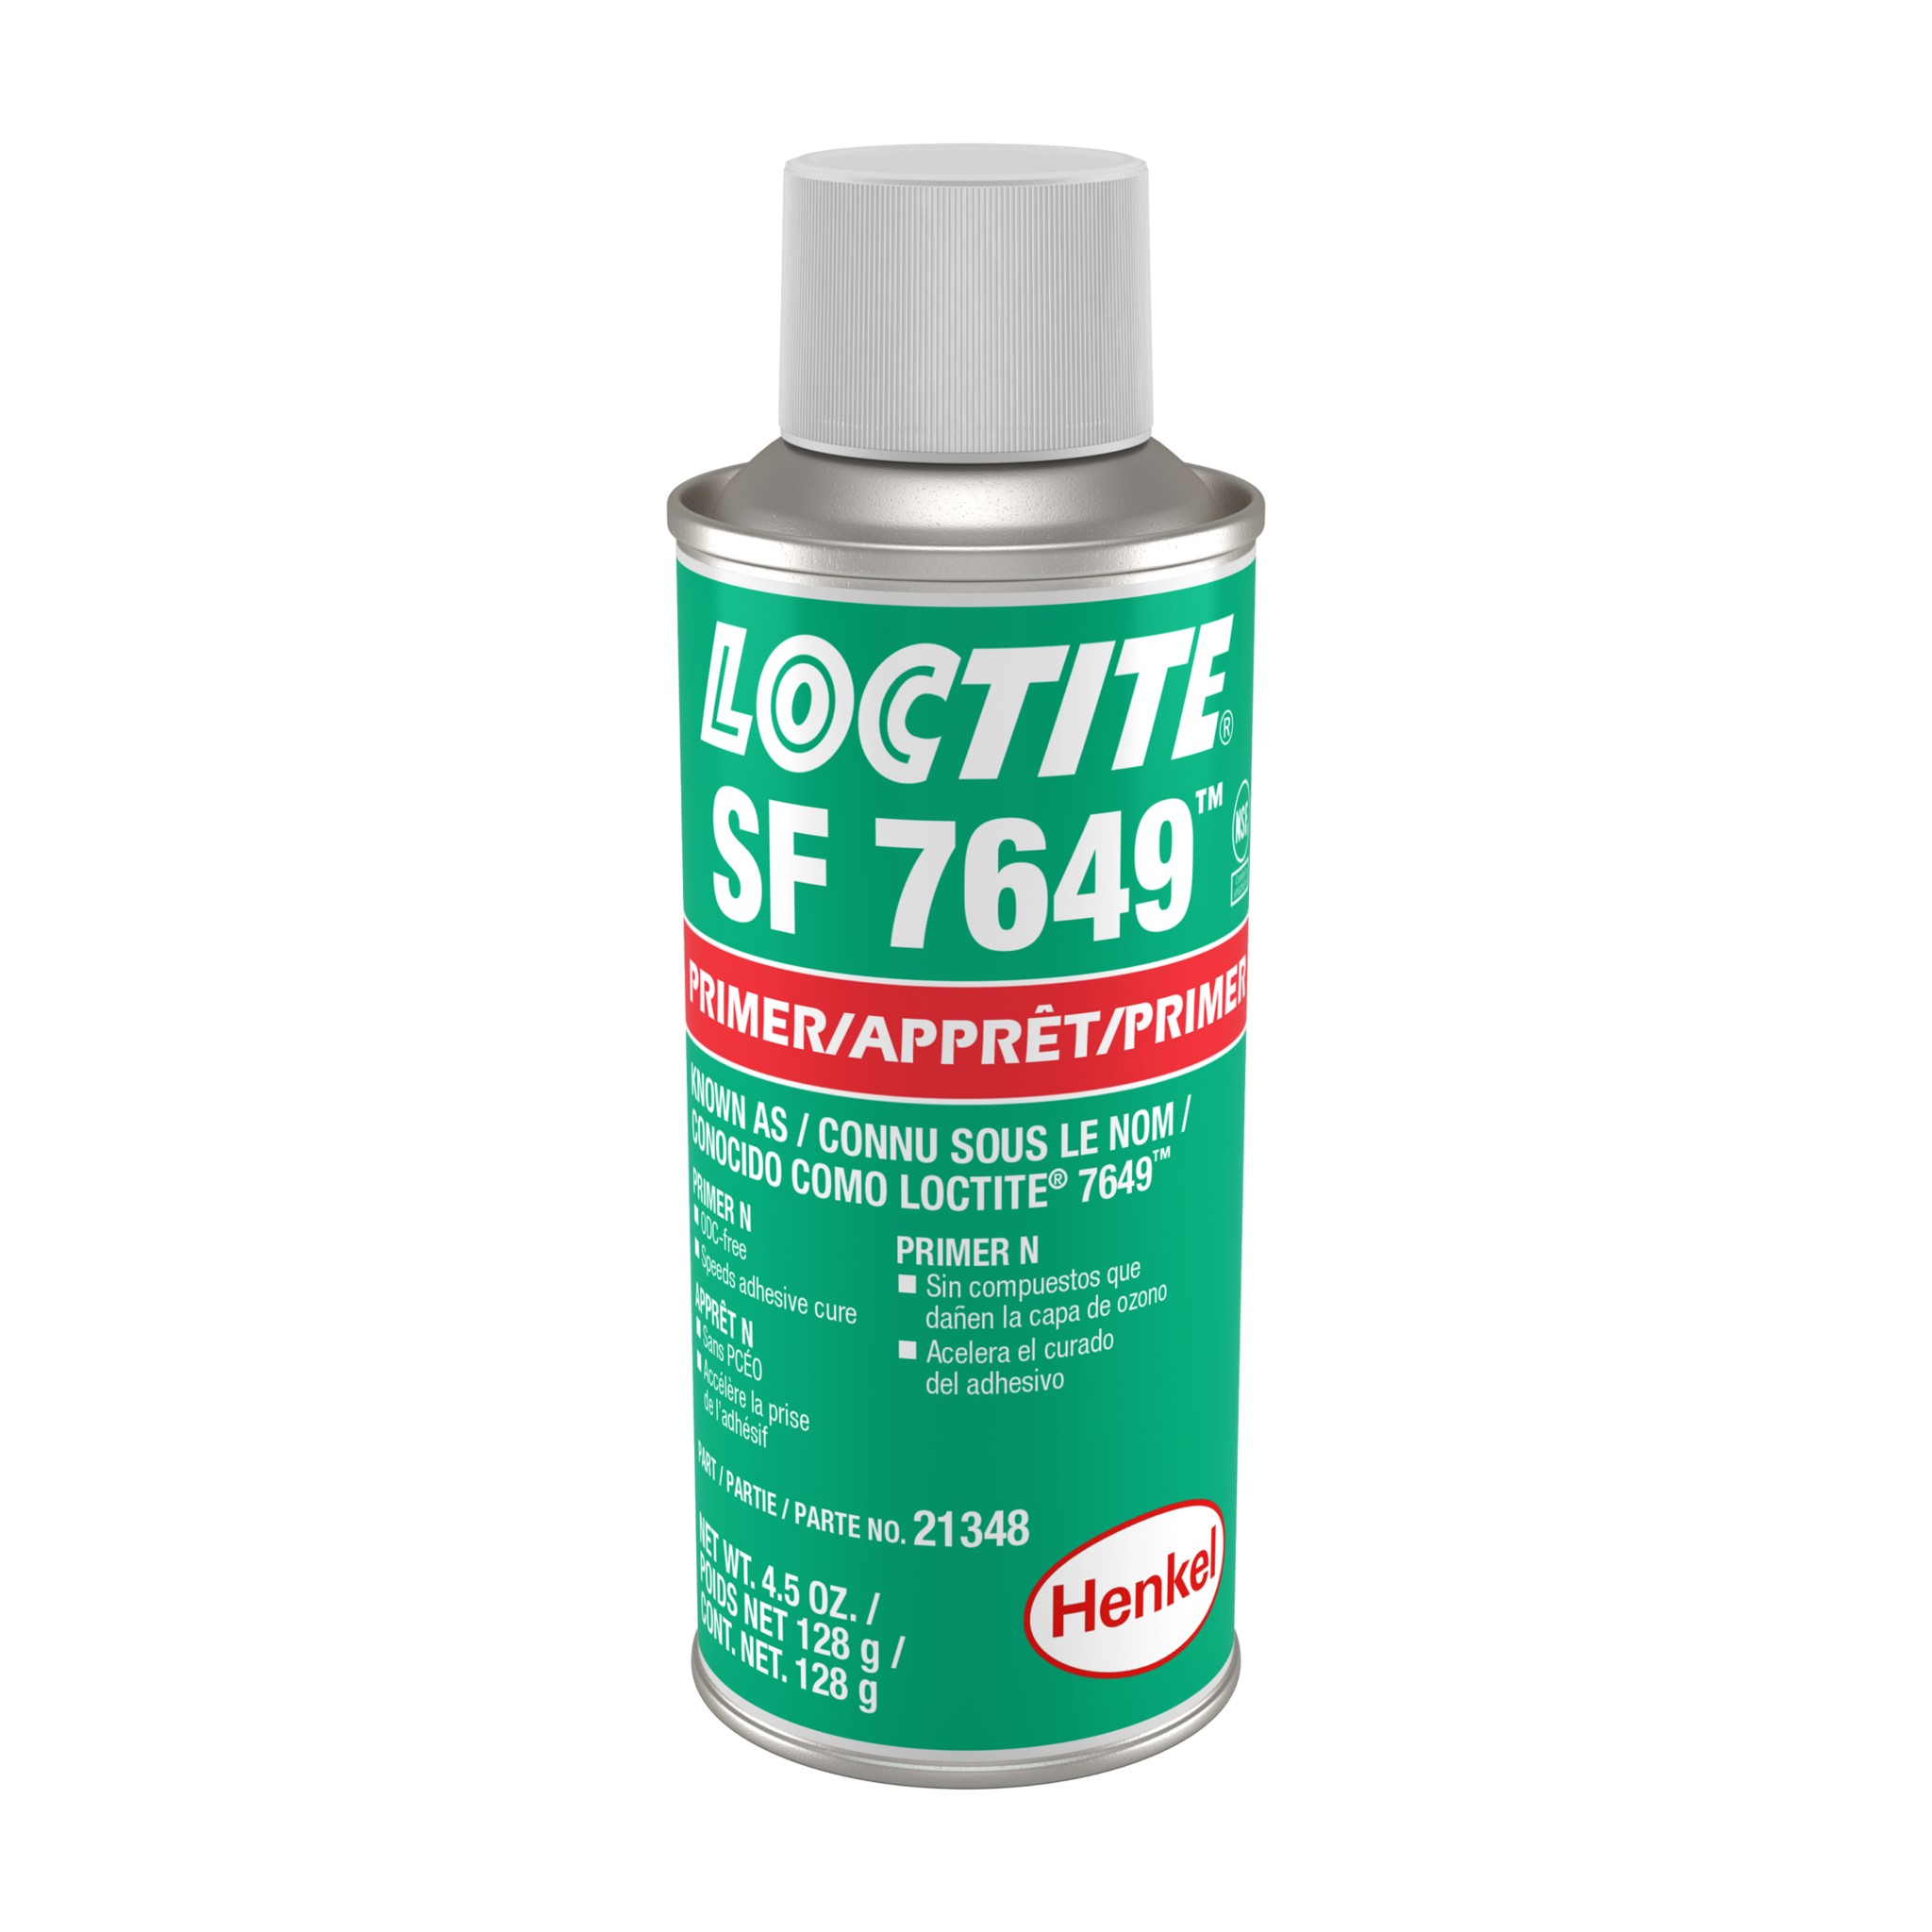 142379 Loctite 7649 Aerosol… - Omega Parts International BV